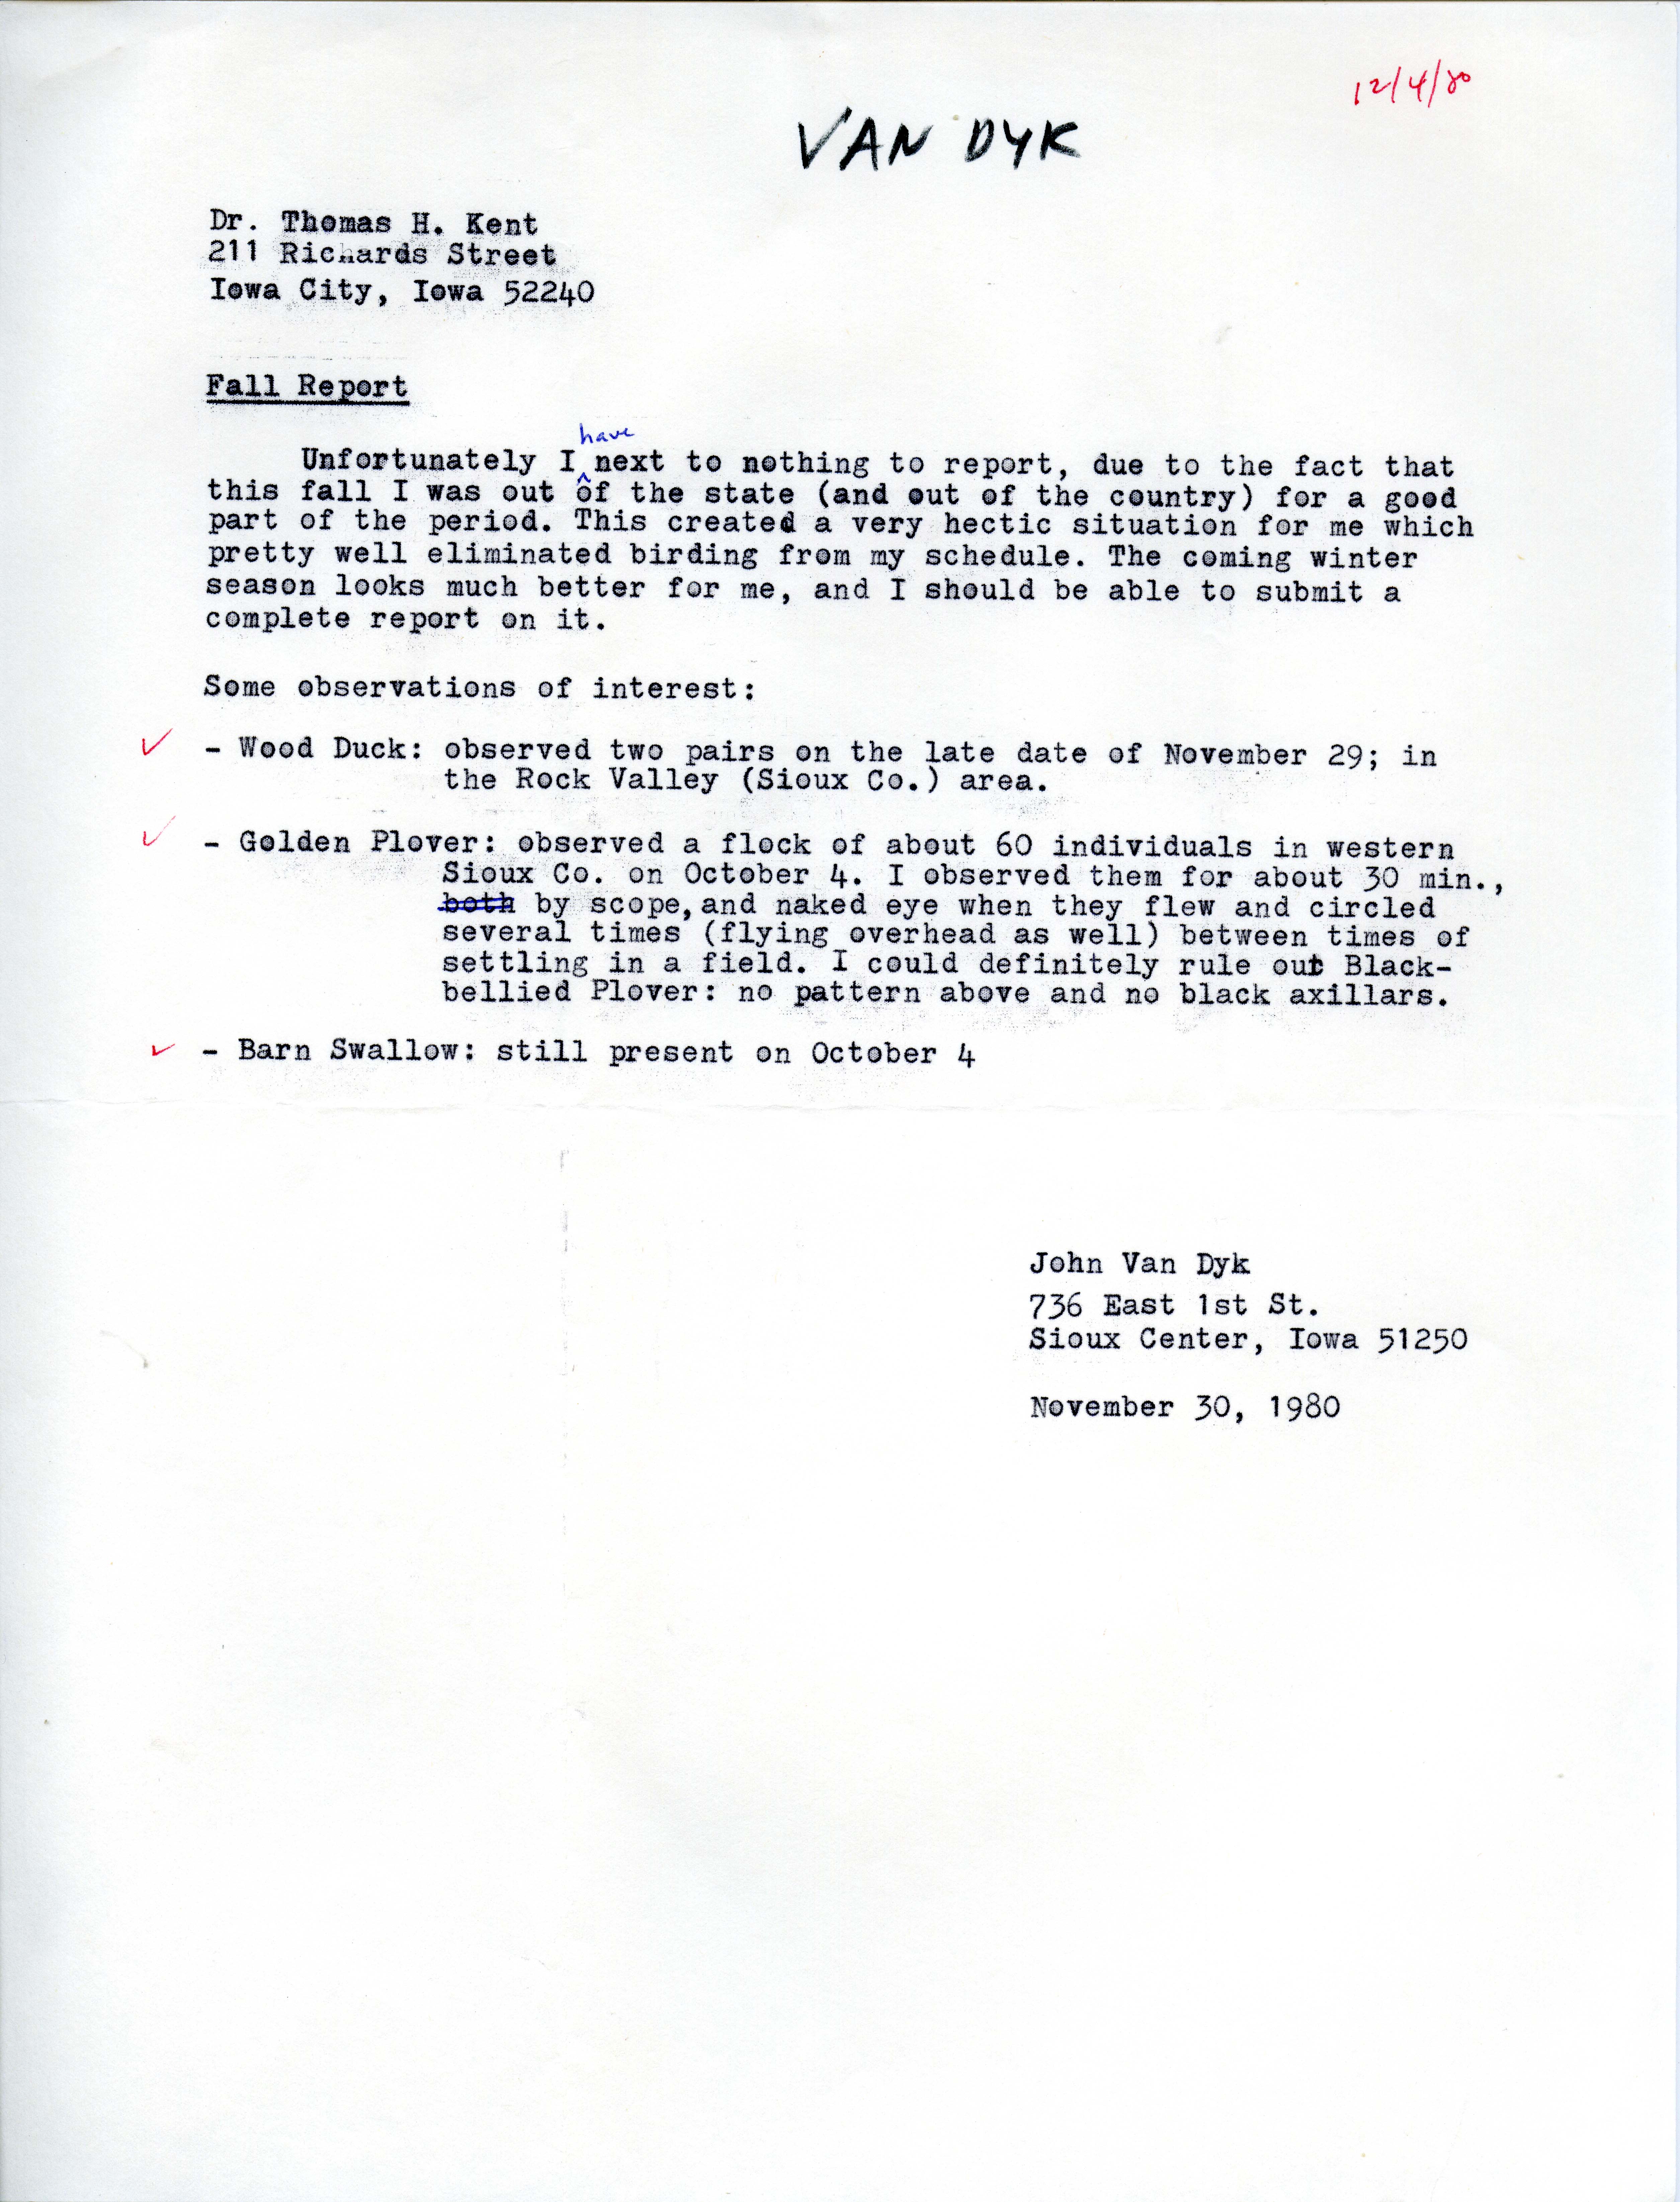 John Van Dyk letter to Thomas Kent regarding his Fall report, November 30, 1980